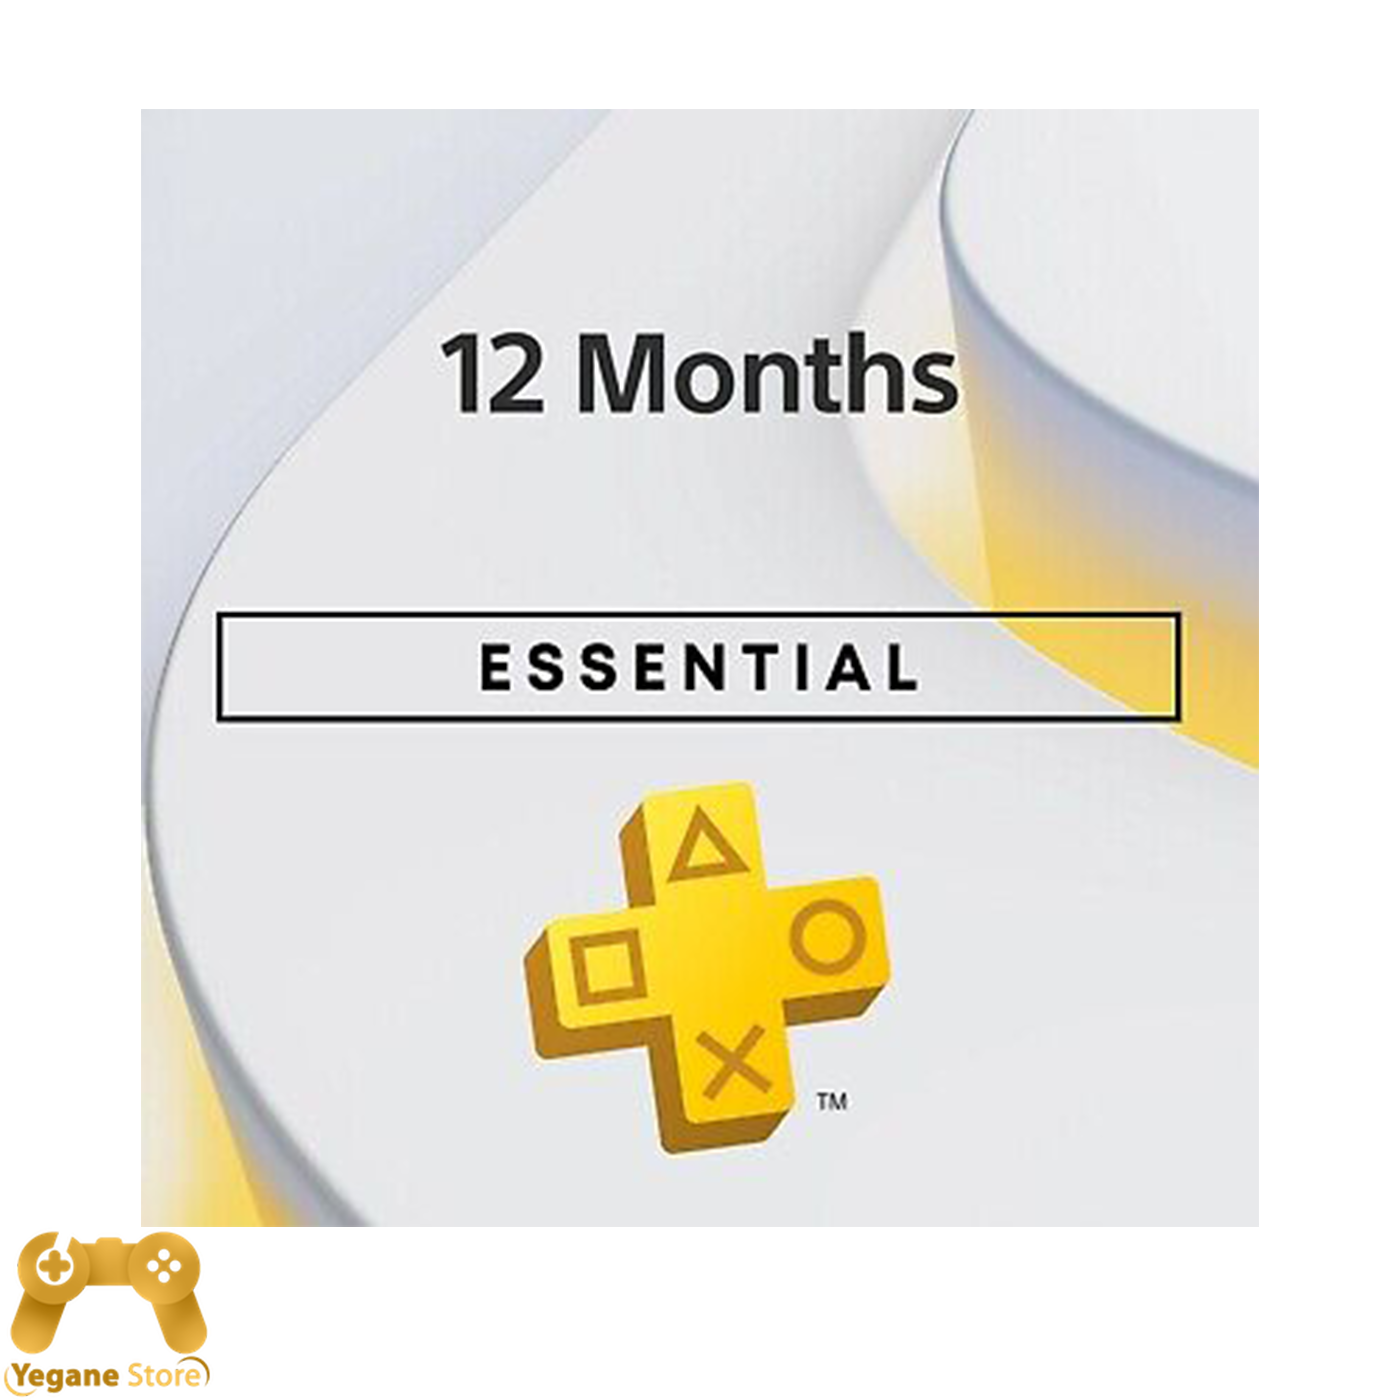 خرید  پلی استیشن پلاس اسنشیال12 ماهه -  Plus Essential